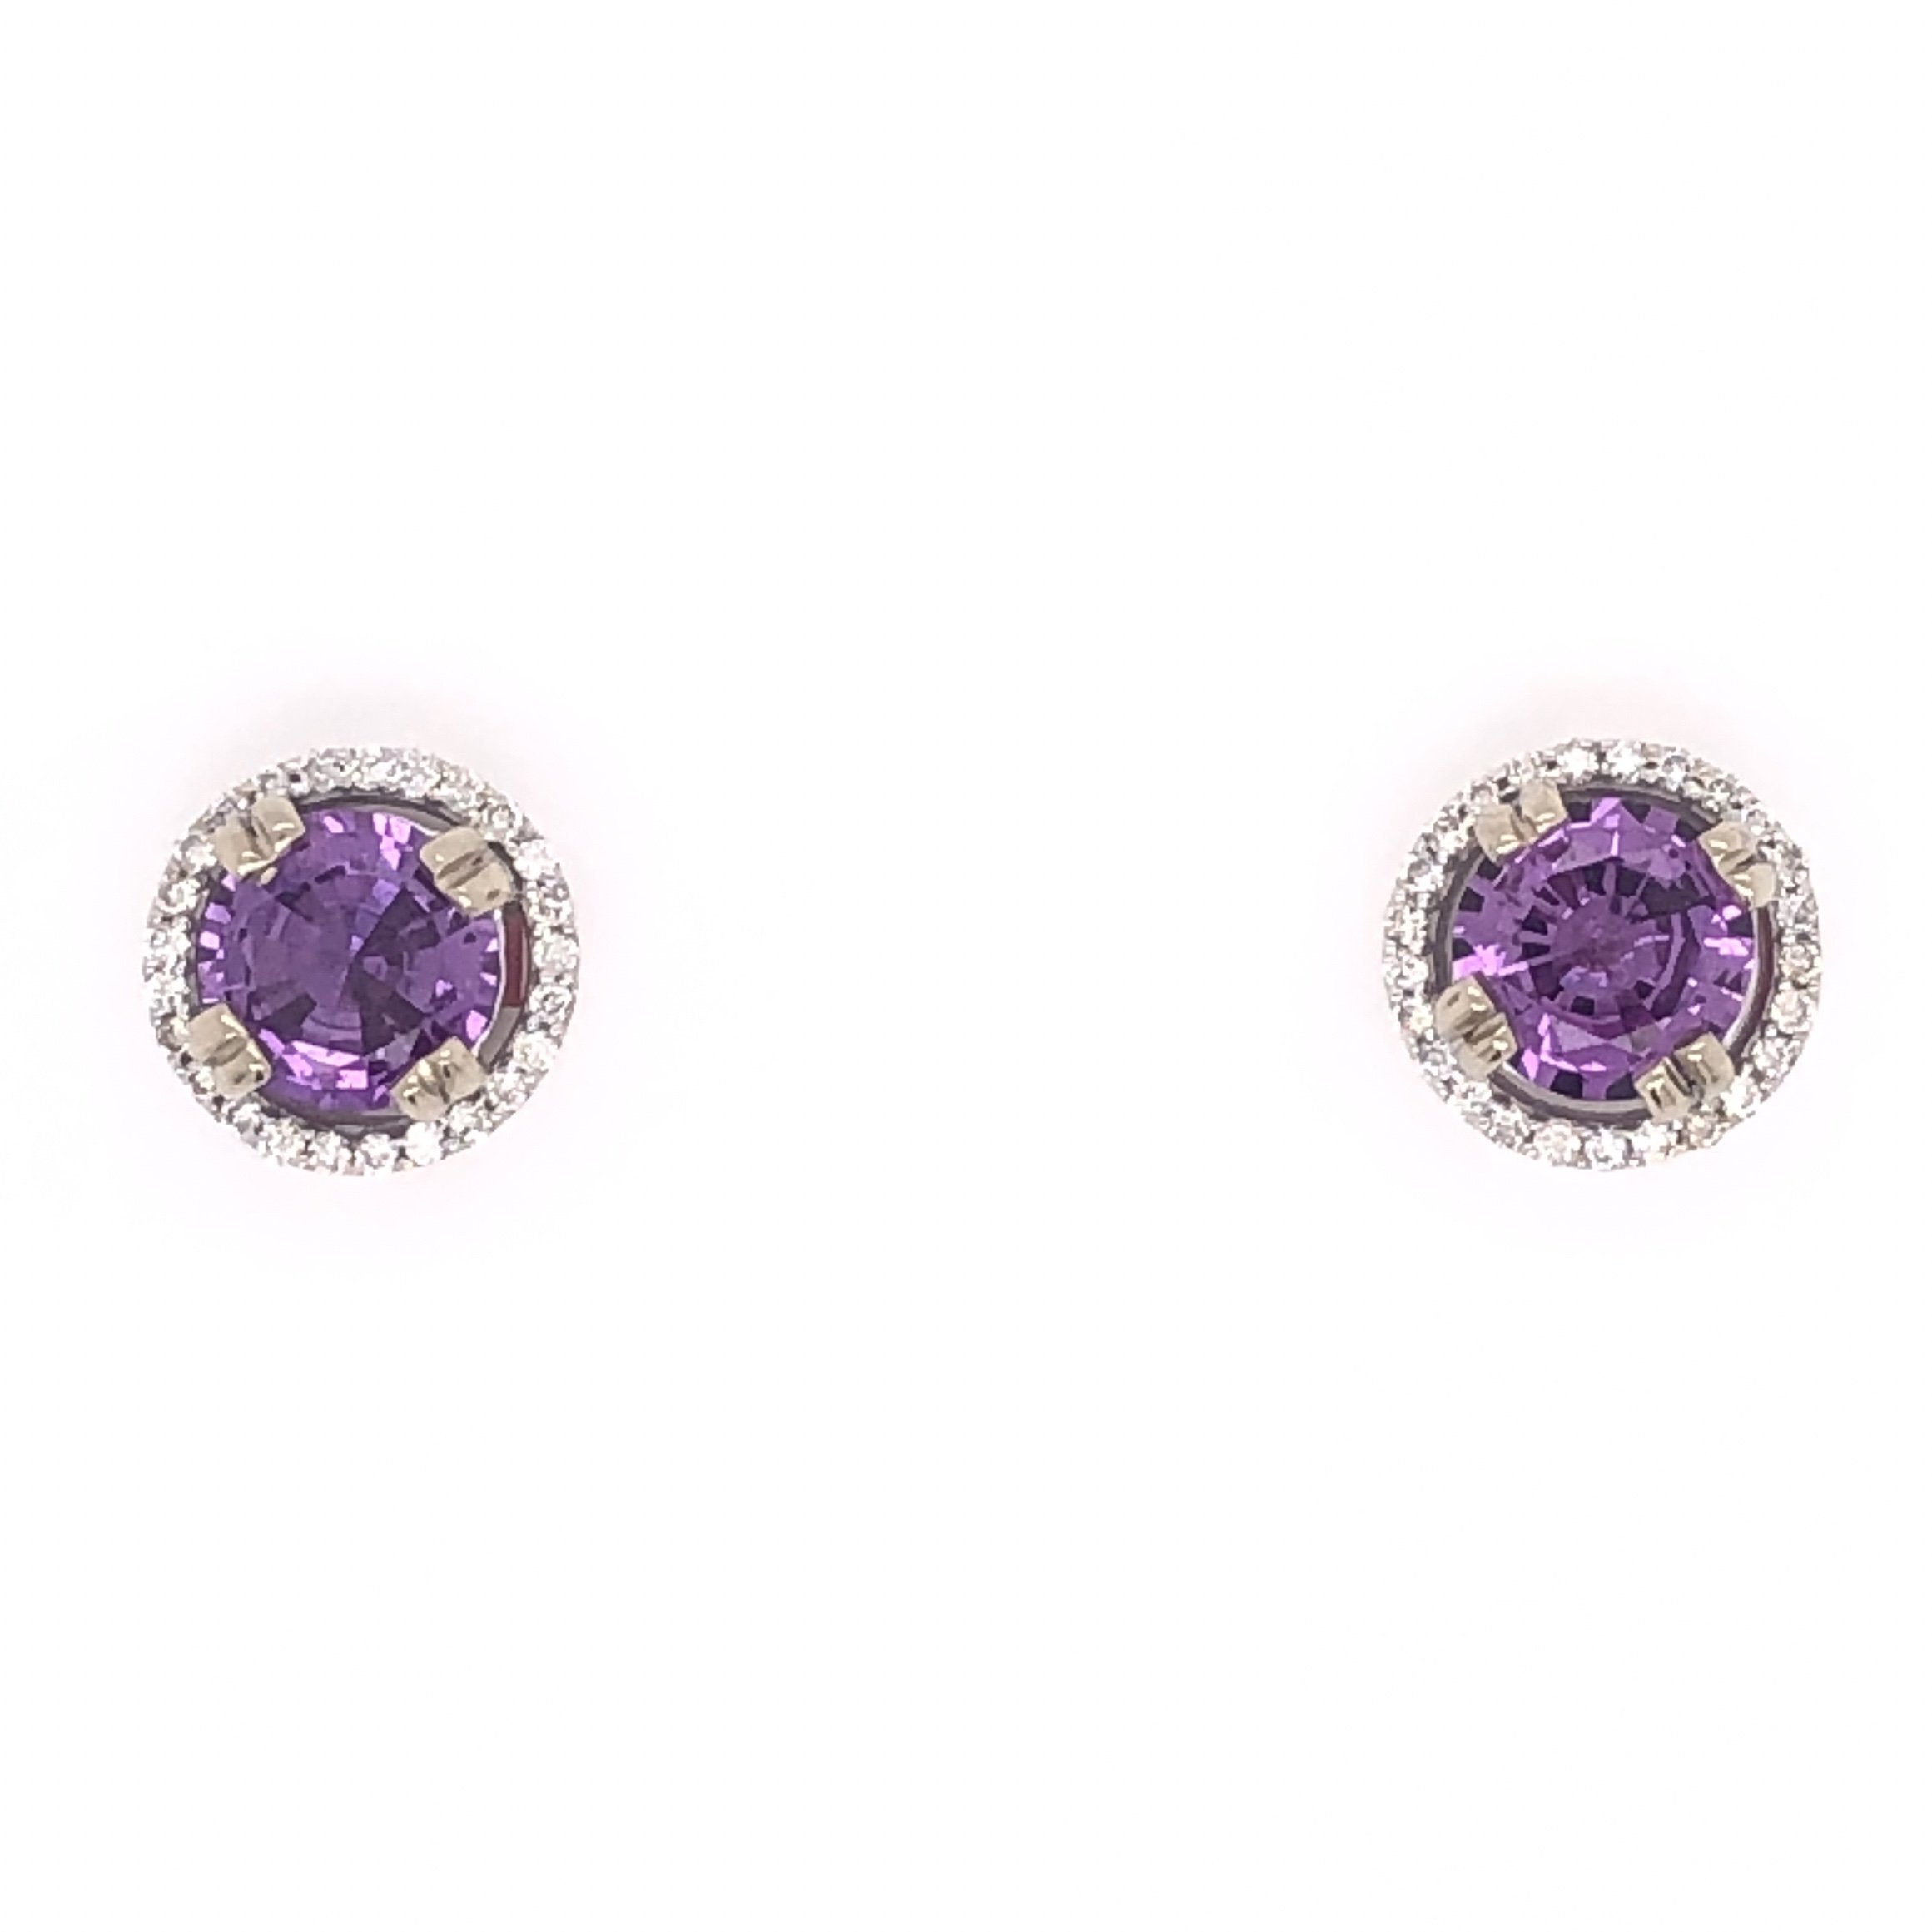 14K White Gold 1.87tcw Pinkish Purple Round Sapphire Stud Earrings withe .34tcw Diamonds 11/16" Diameter